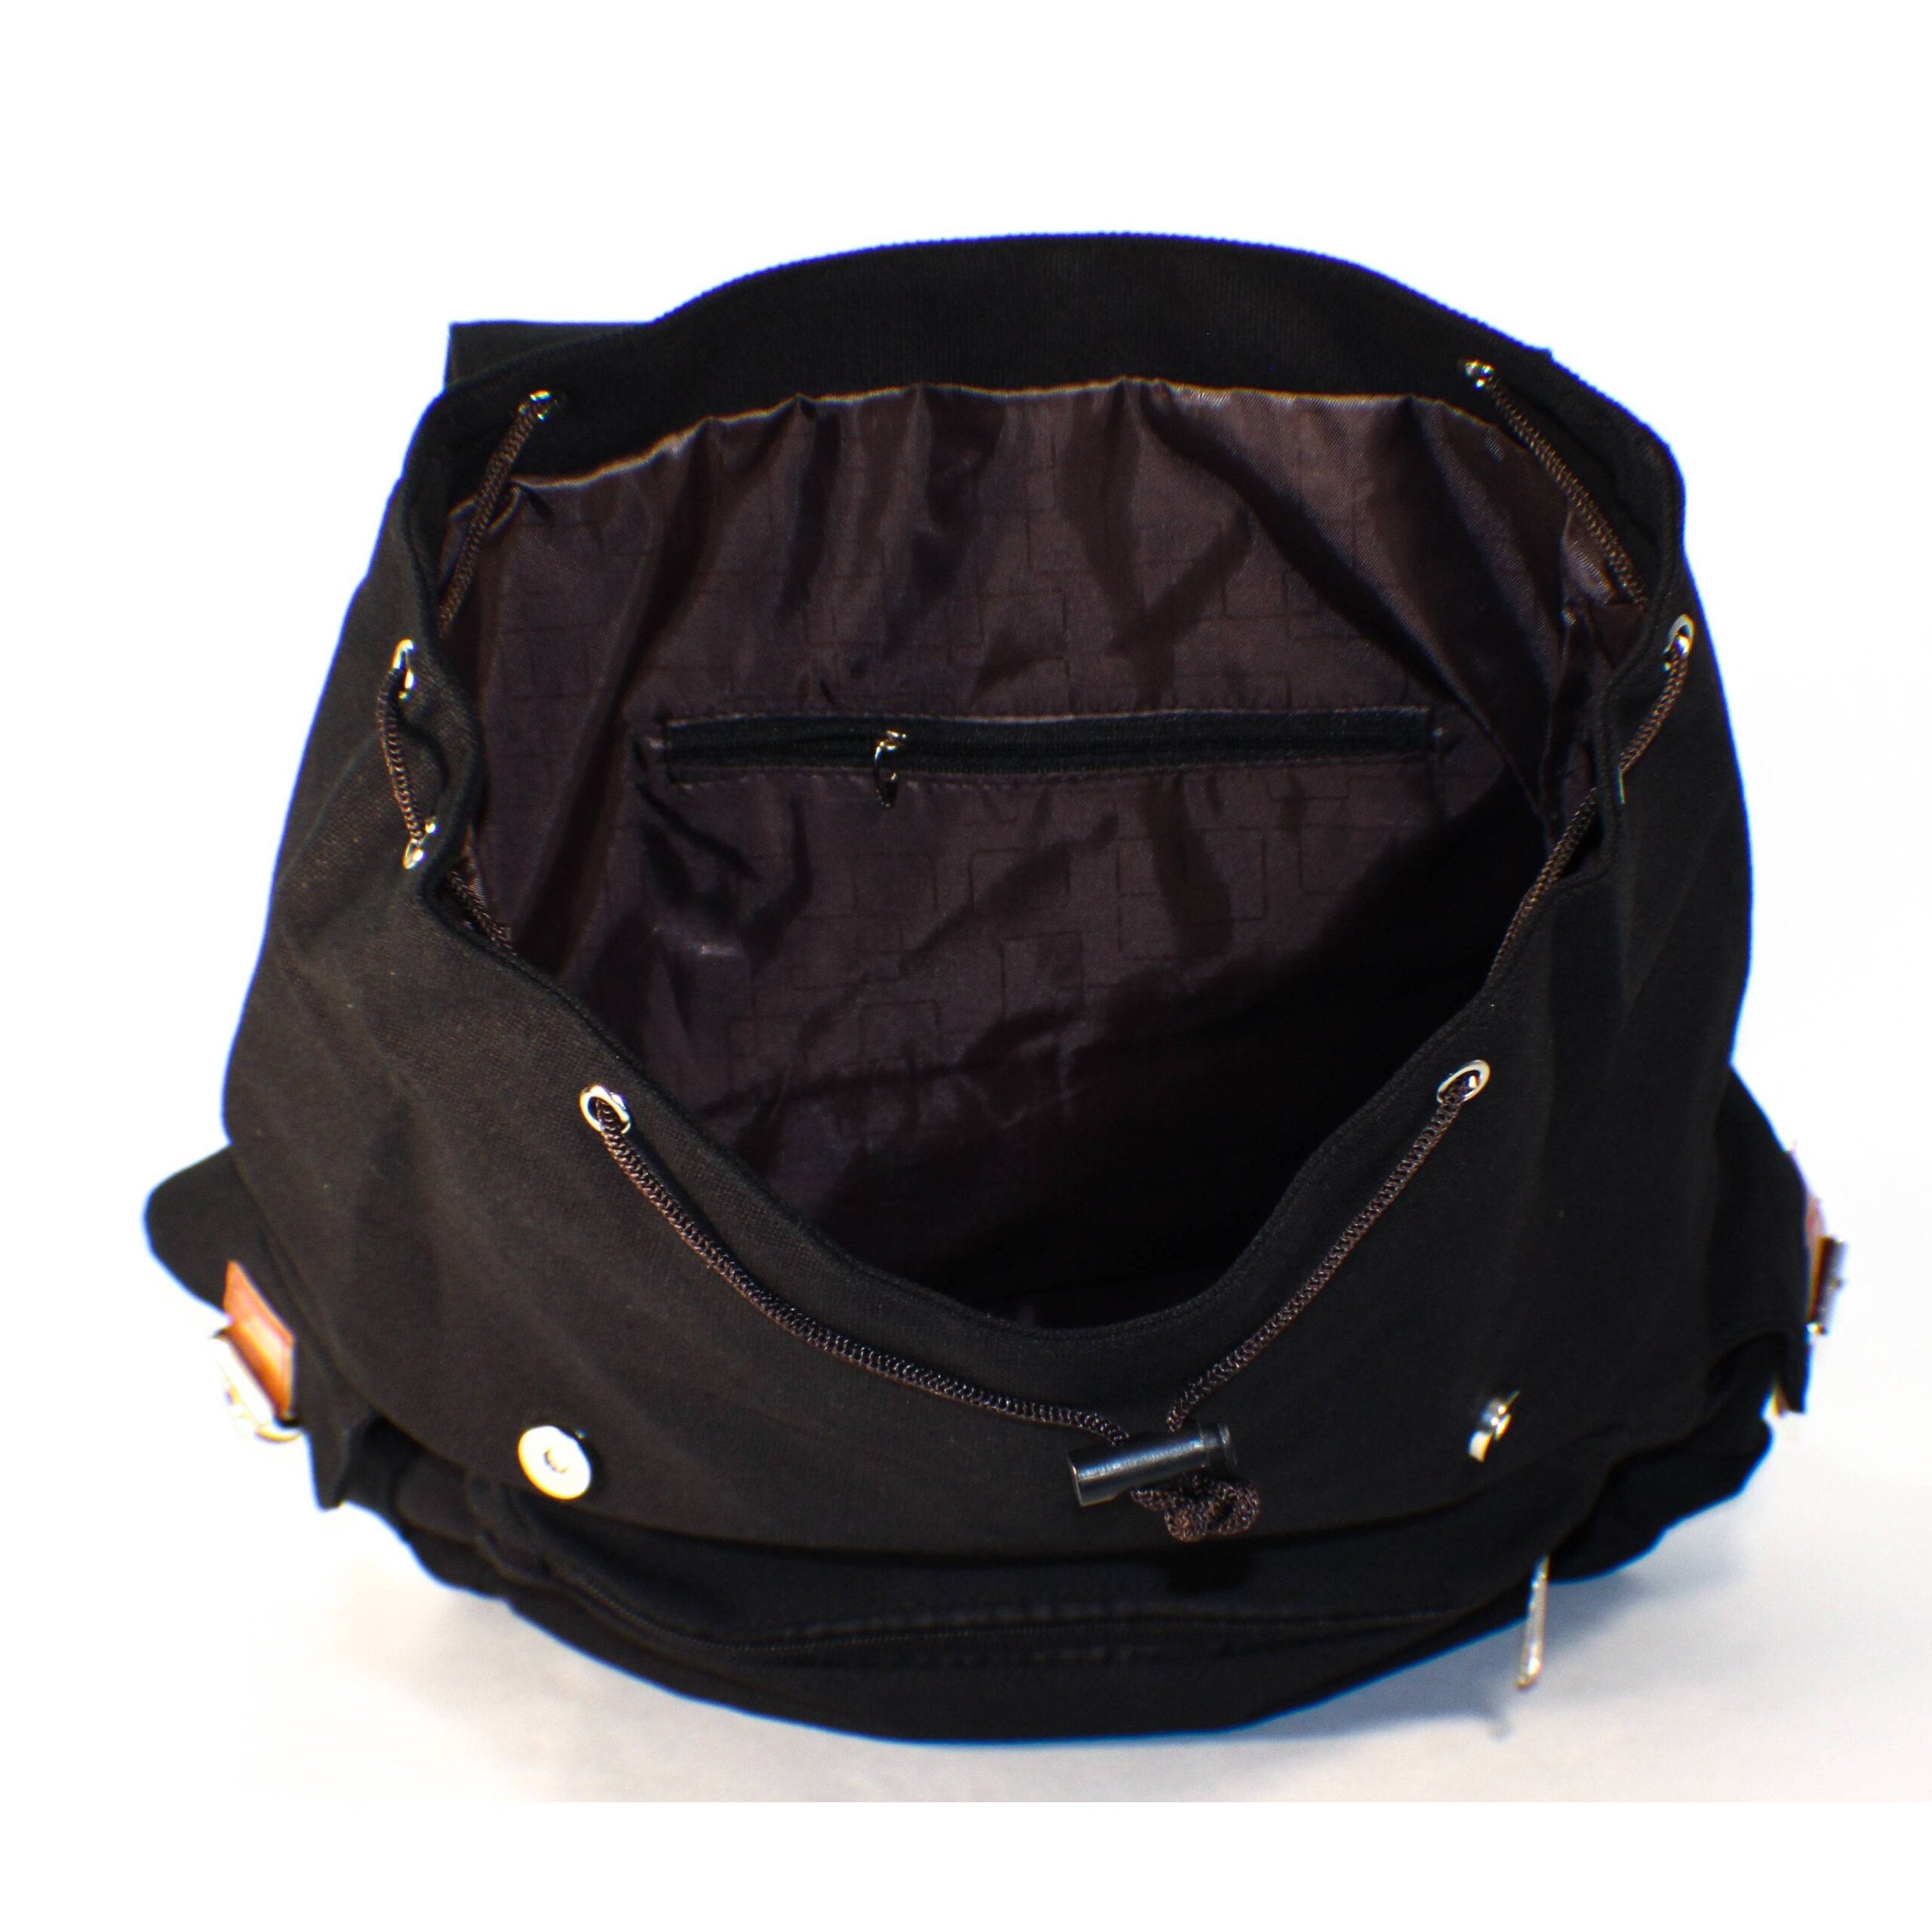 New Black Canvas Backpack School Bag Super Cute for School - ebowsos